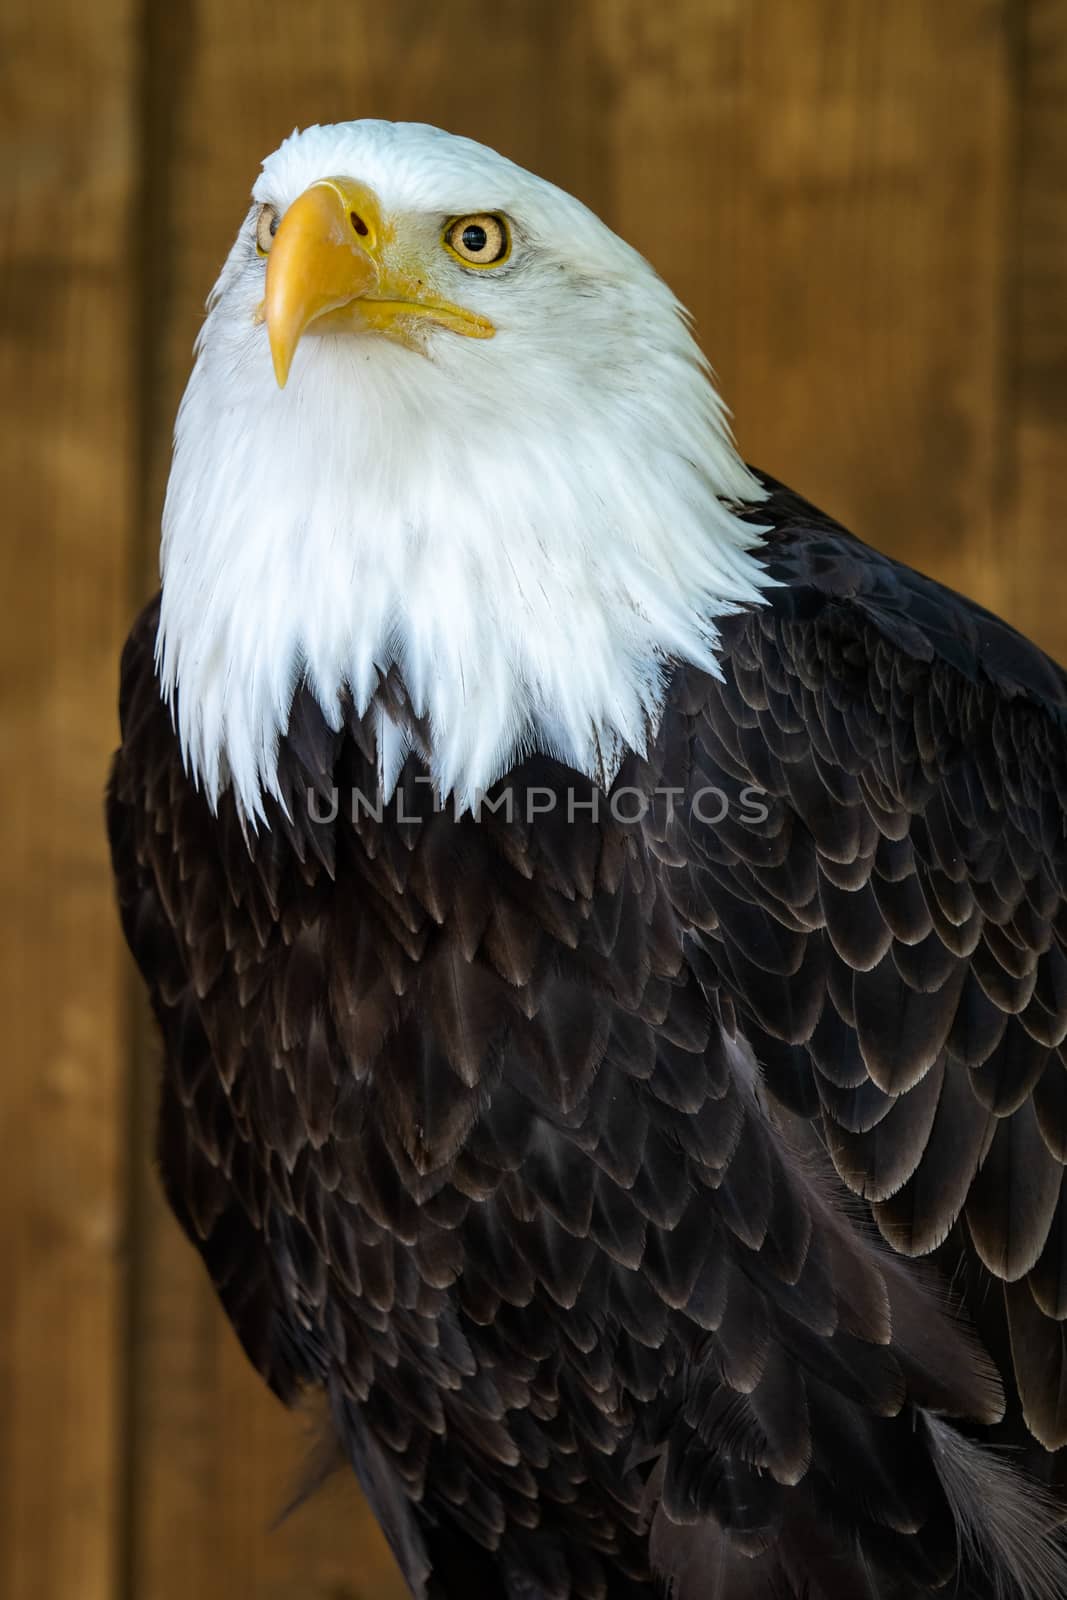 Portrait of a bald eagle (Haliaeetus leucocephalus) on brown bac by xtrekx